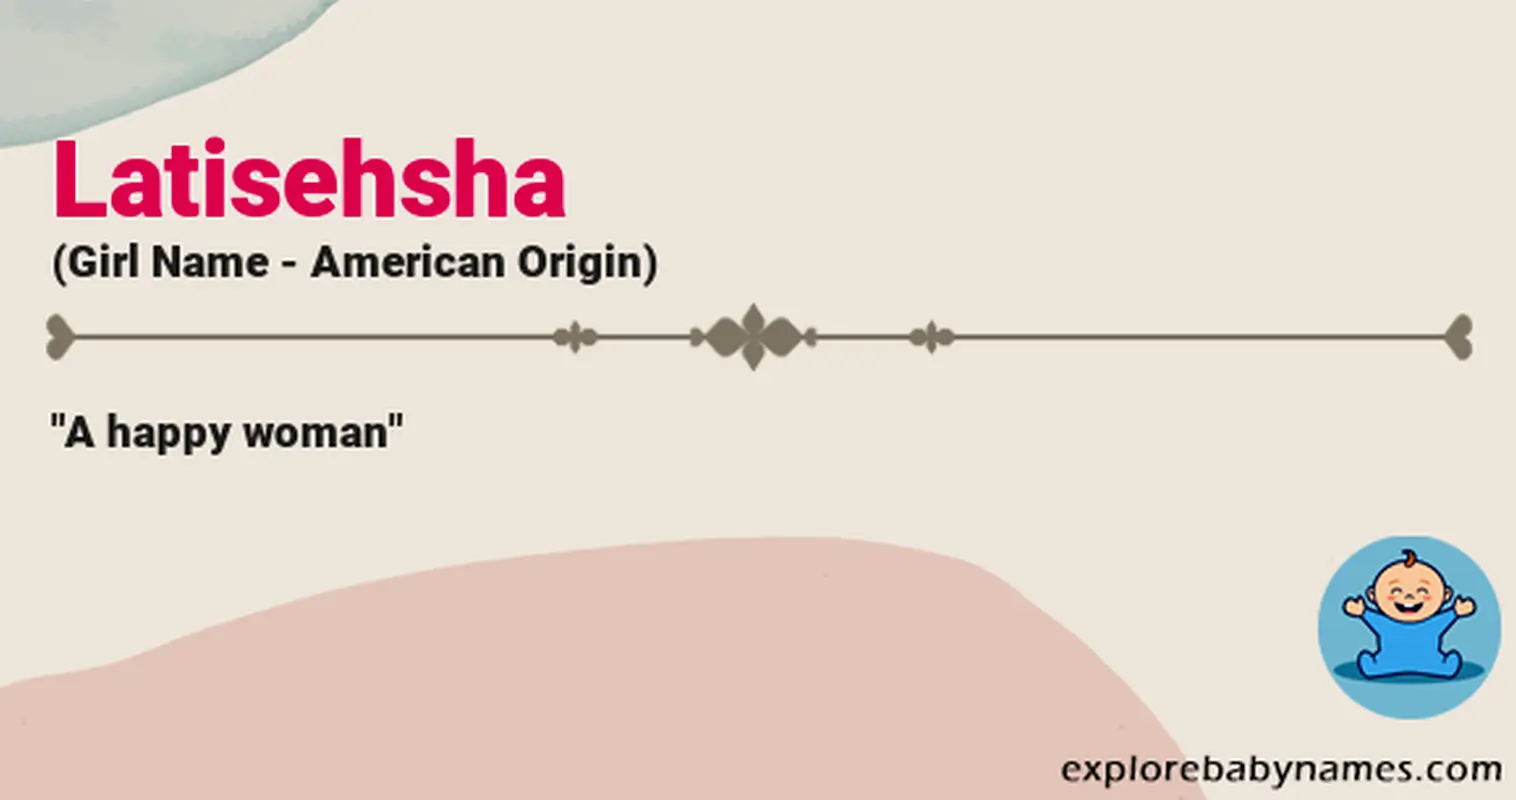 Meaning of Latisehsha